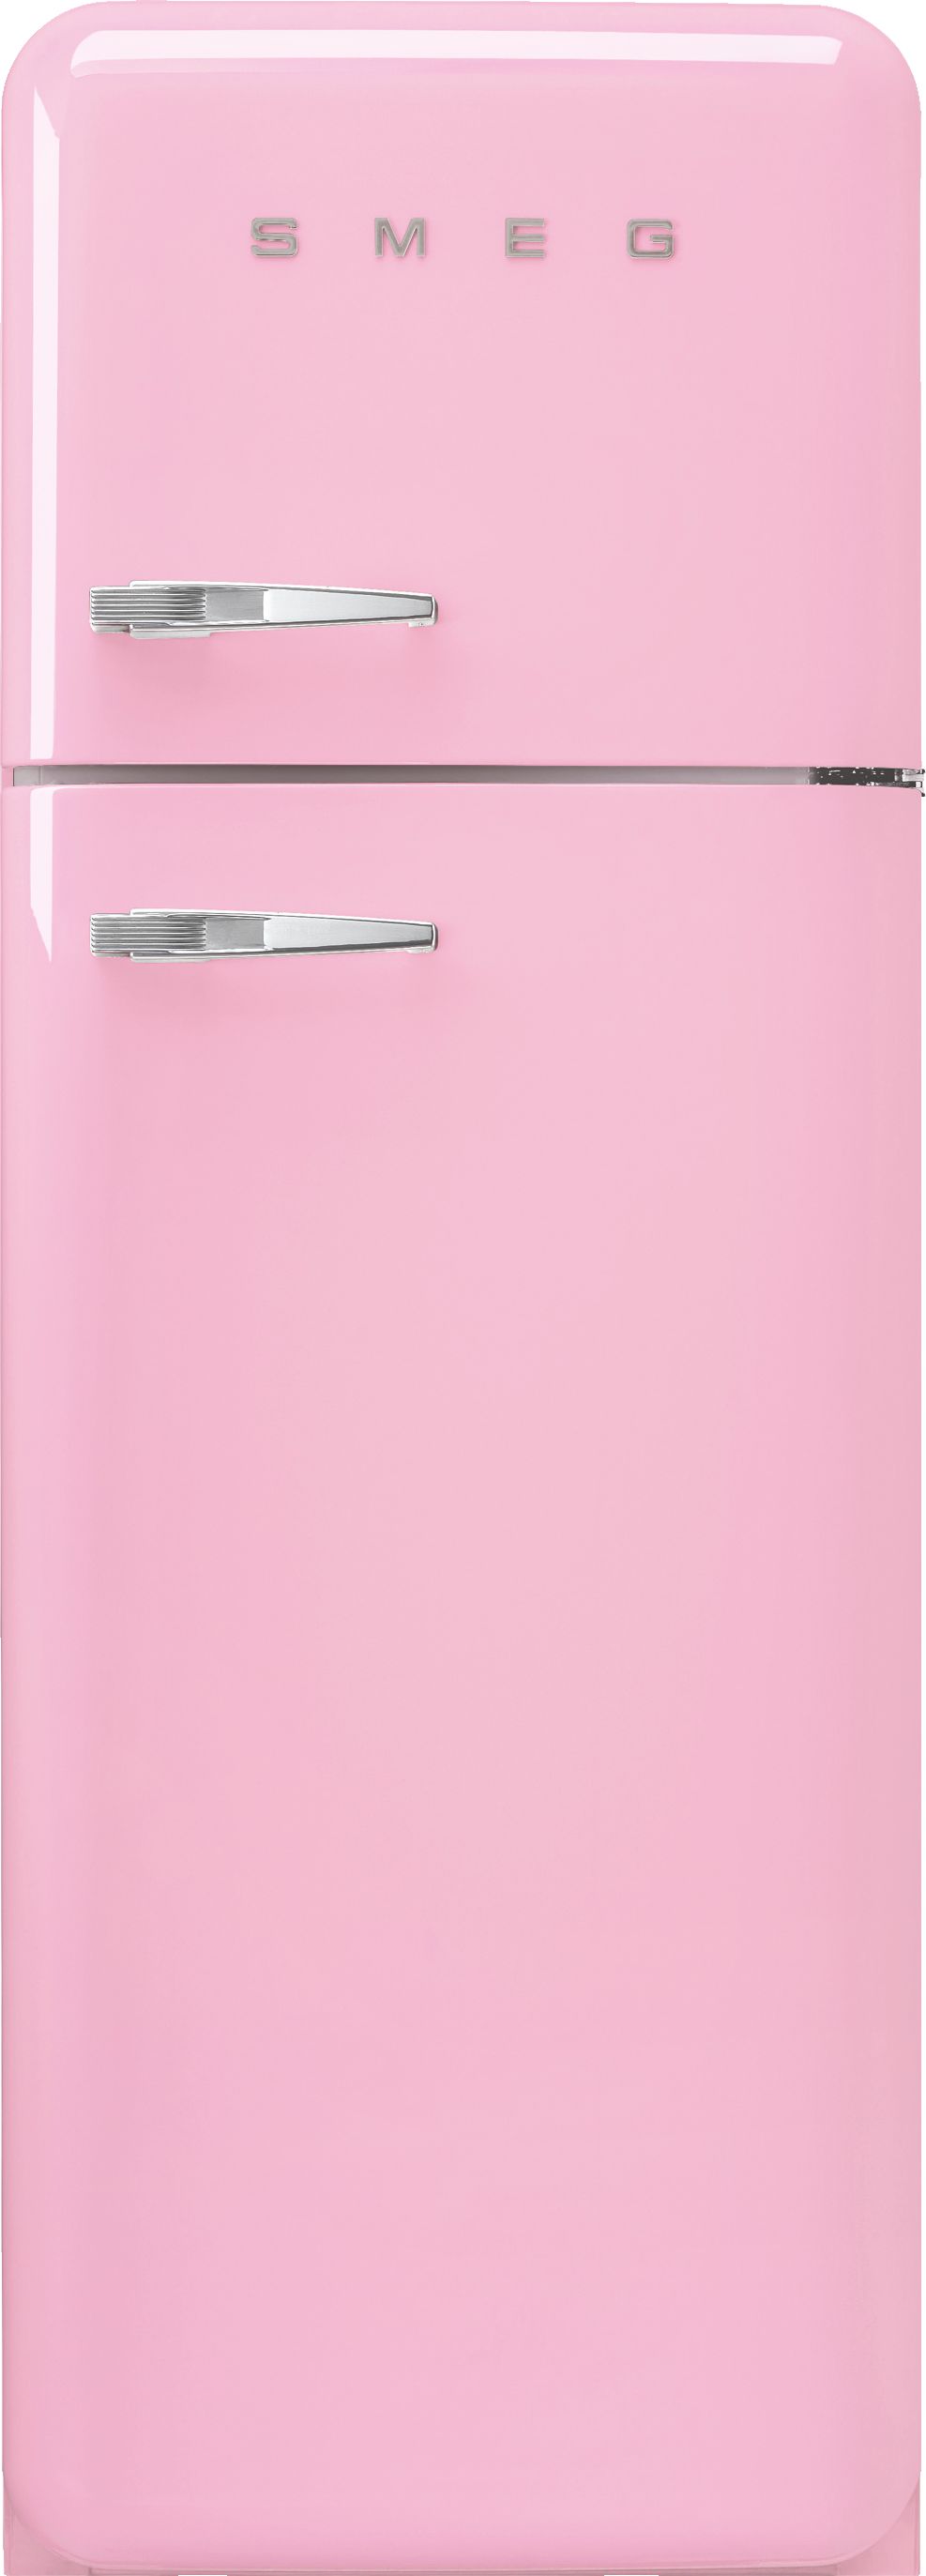 Smeg Right Hand Hinge FAB30RPK5 80/20 Fridge Freezer - Pink - D Rated, Pink